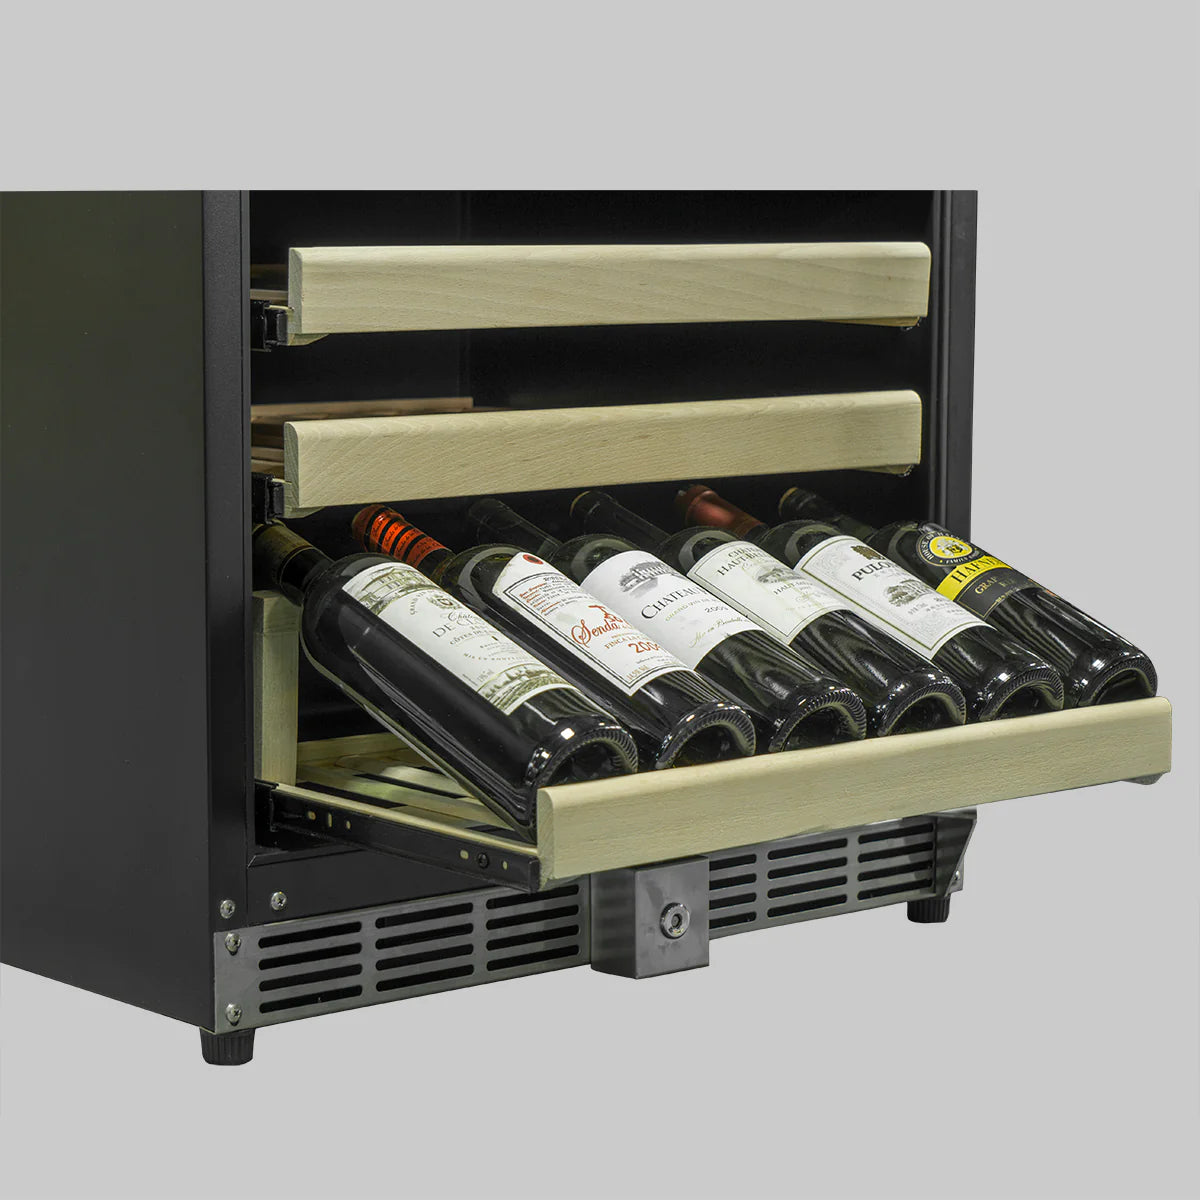 Wine Fridge and Beer Refrigerator COMBO - Under Bench